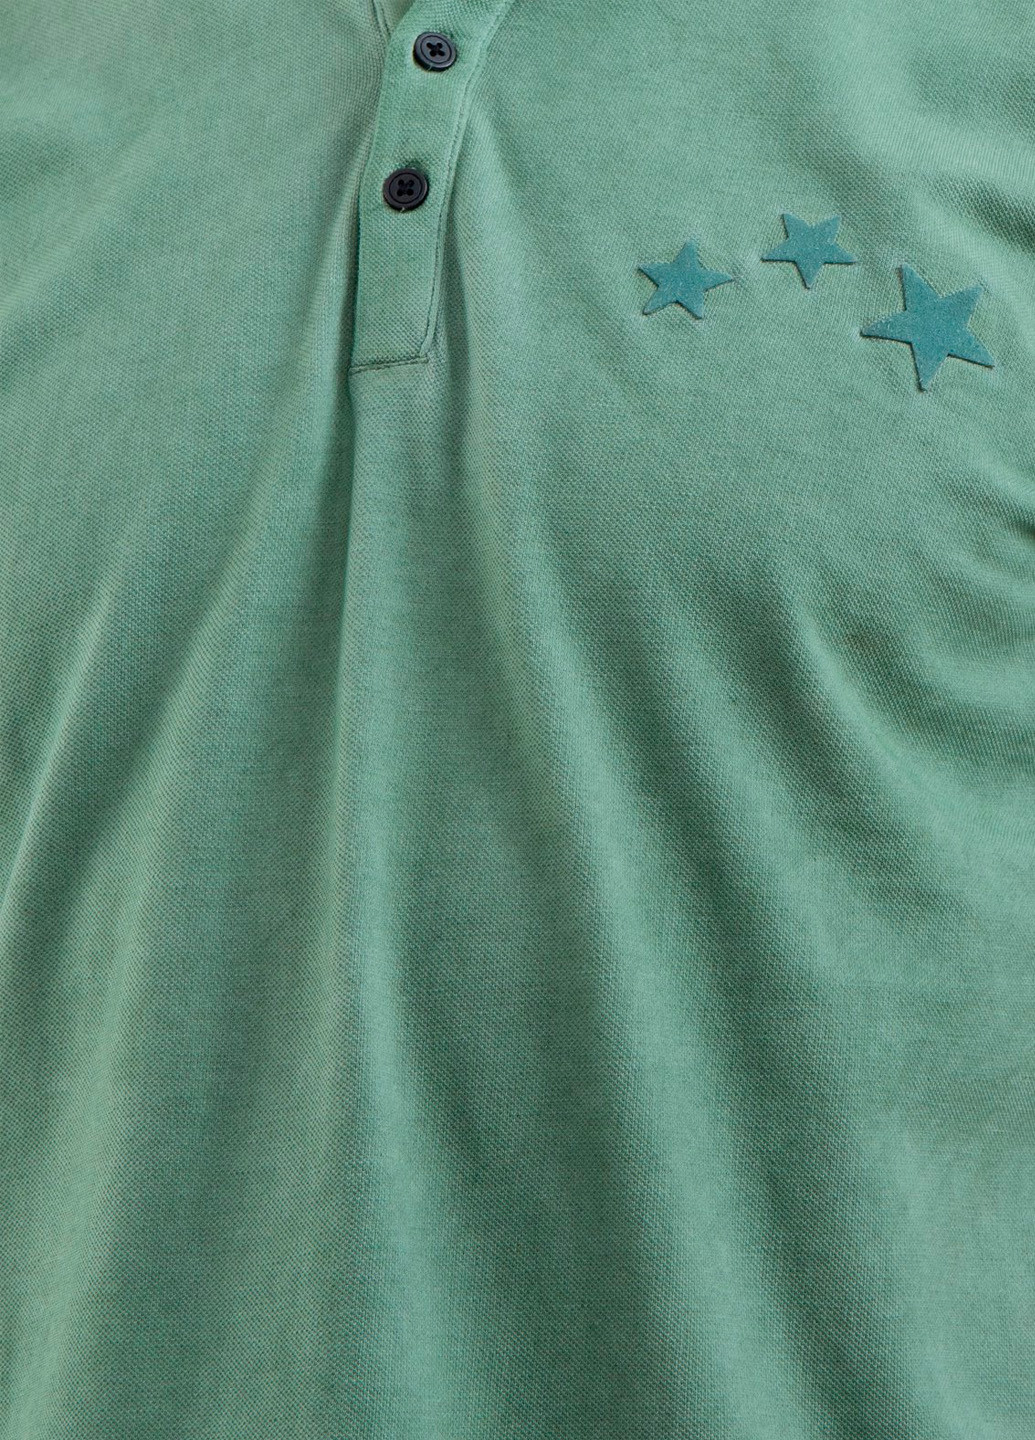 Зеленая футболка-поло для мужчин Antony Morato